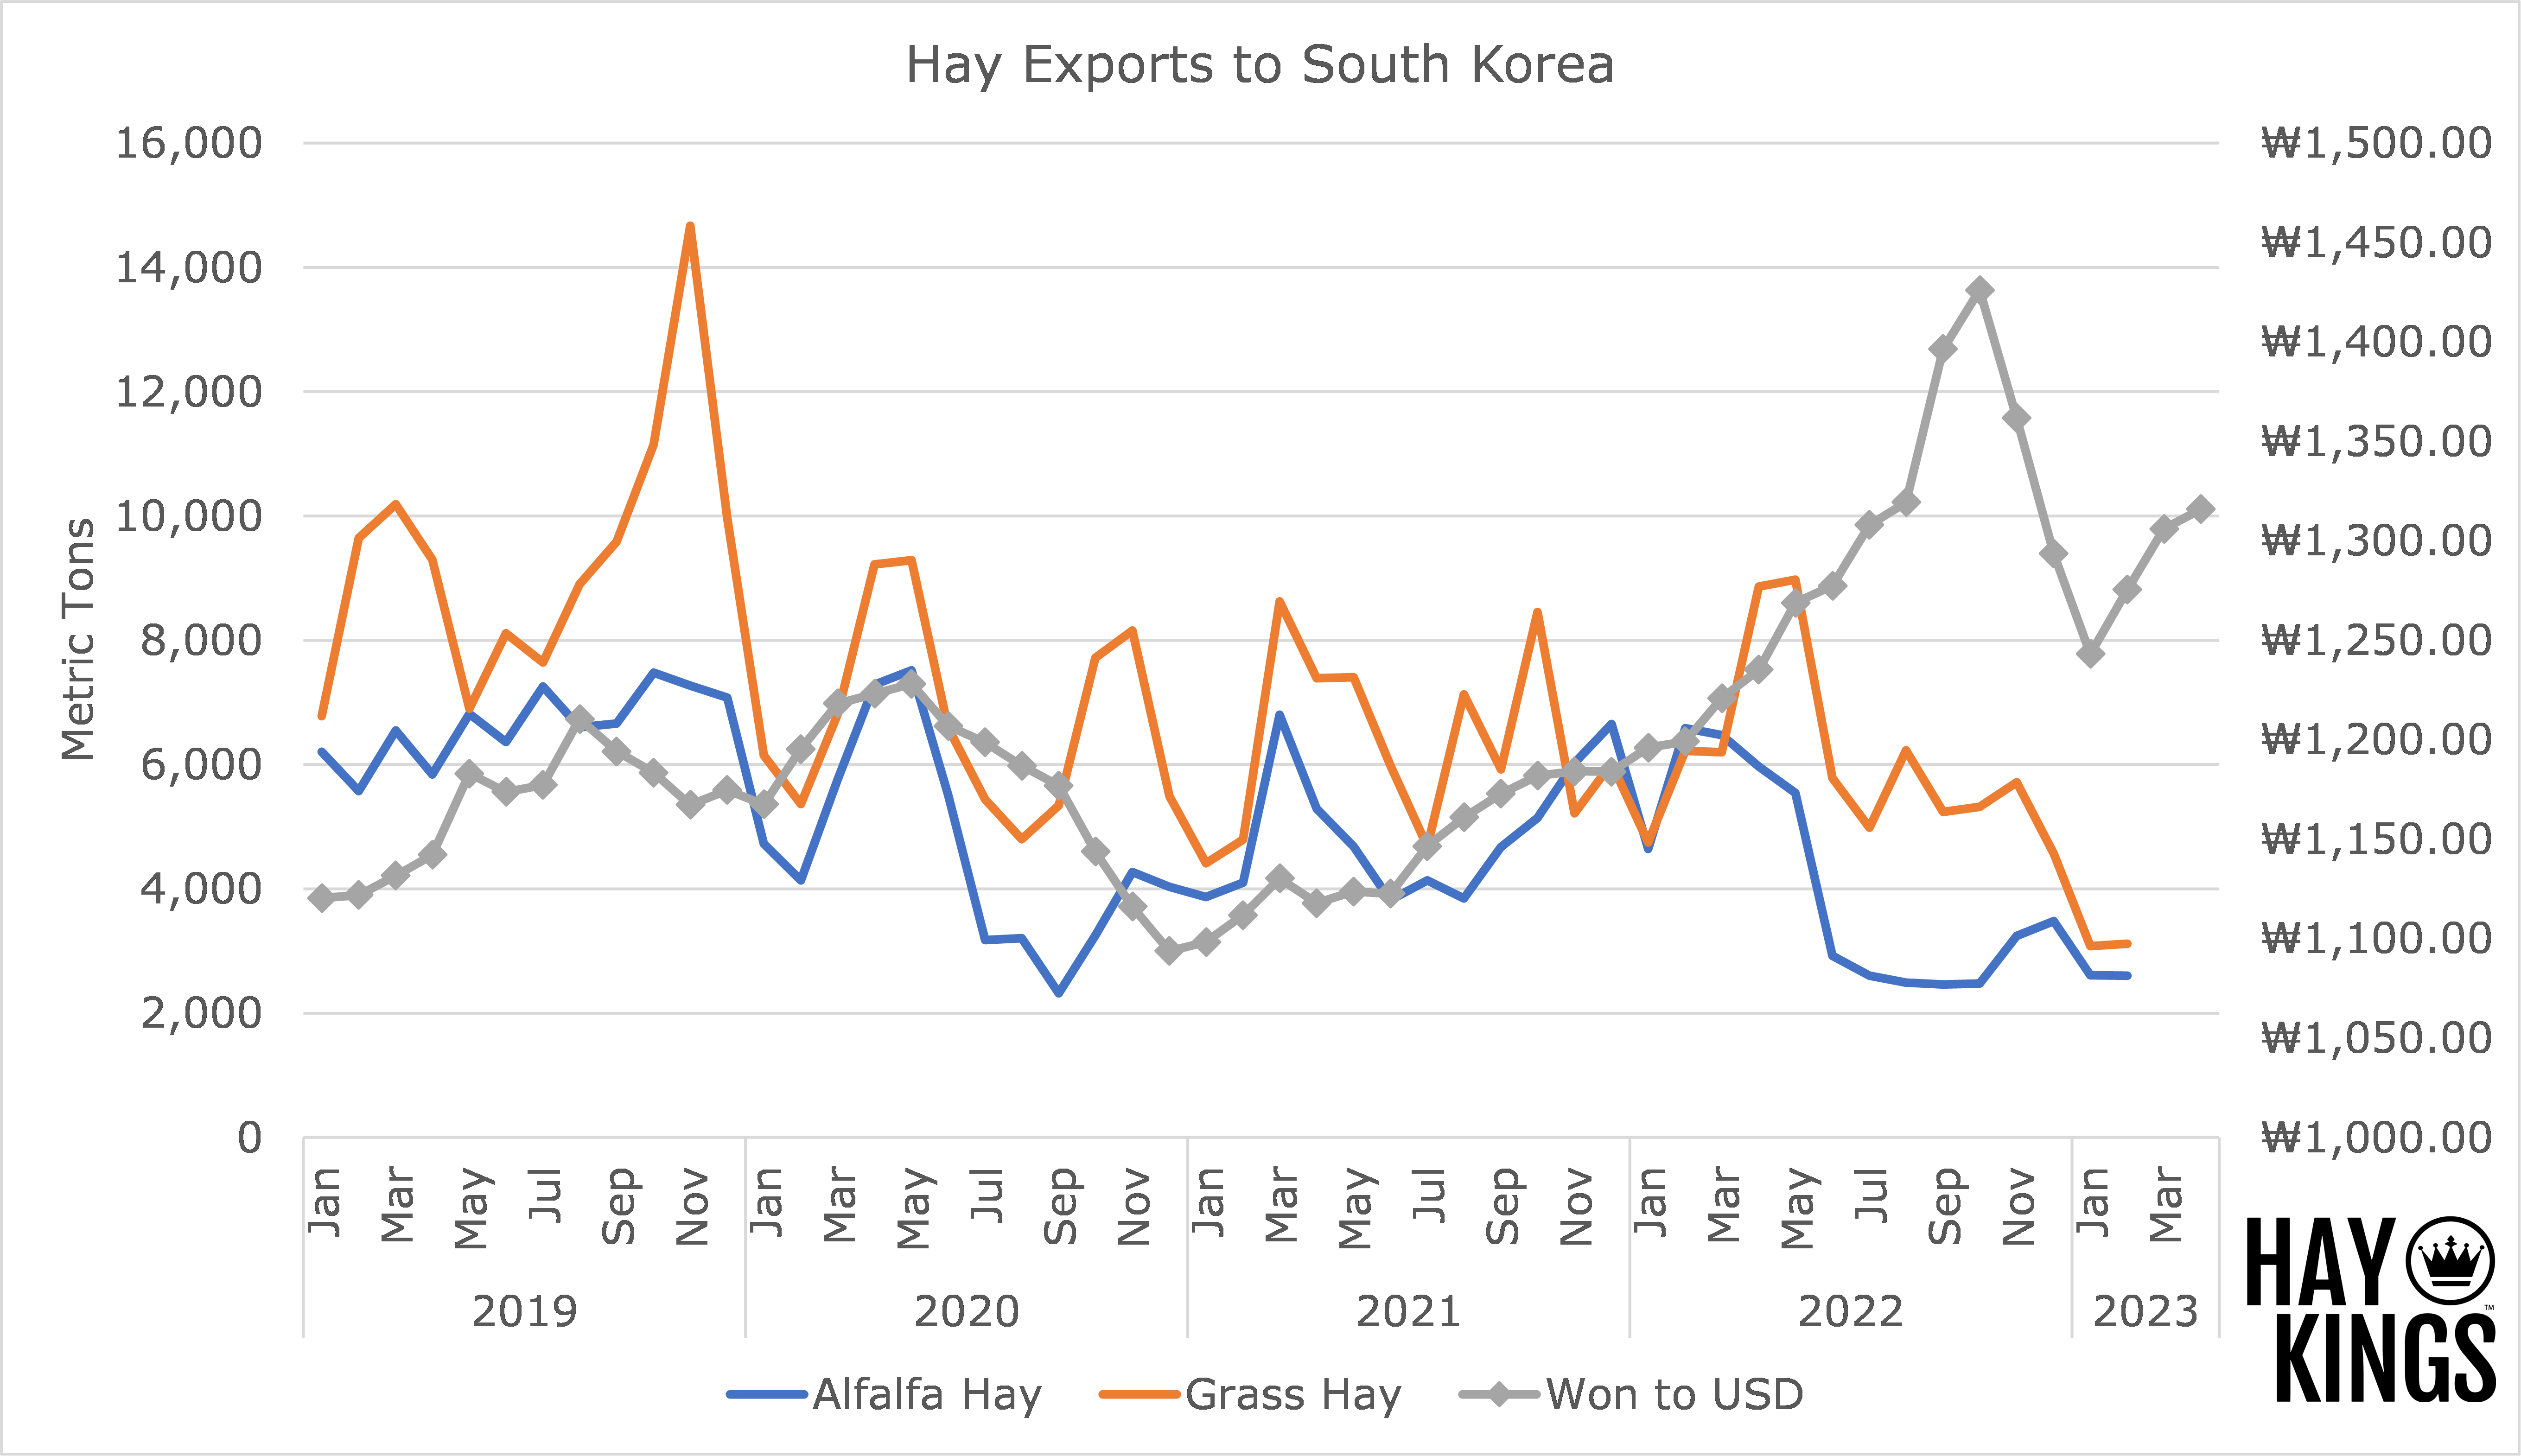 Hay Exports to South Korea - USDA Misses the Mark